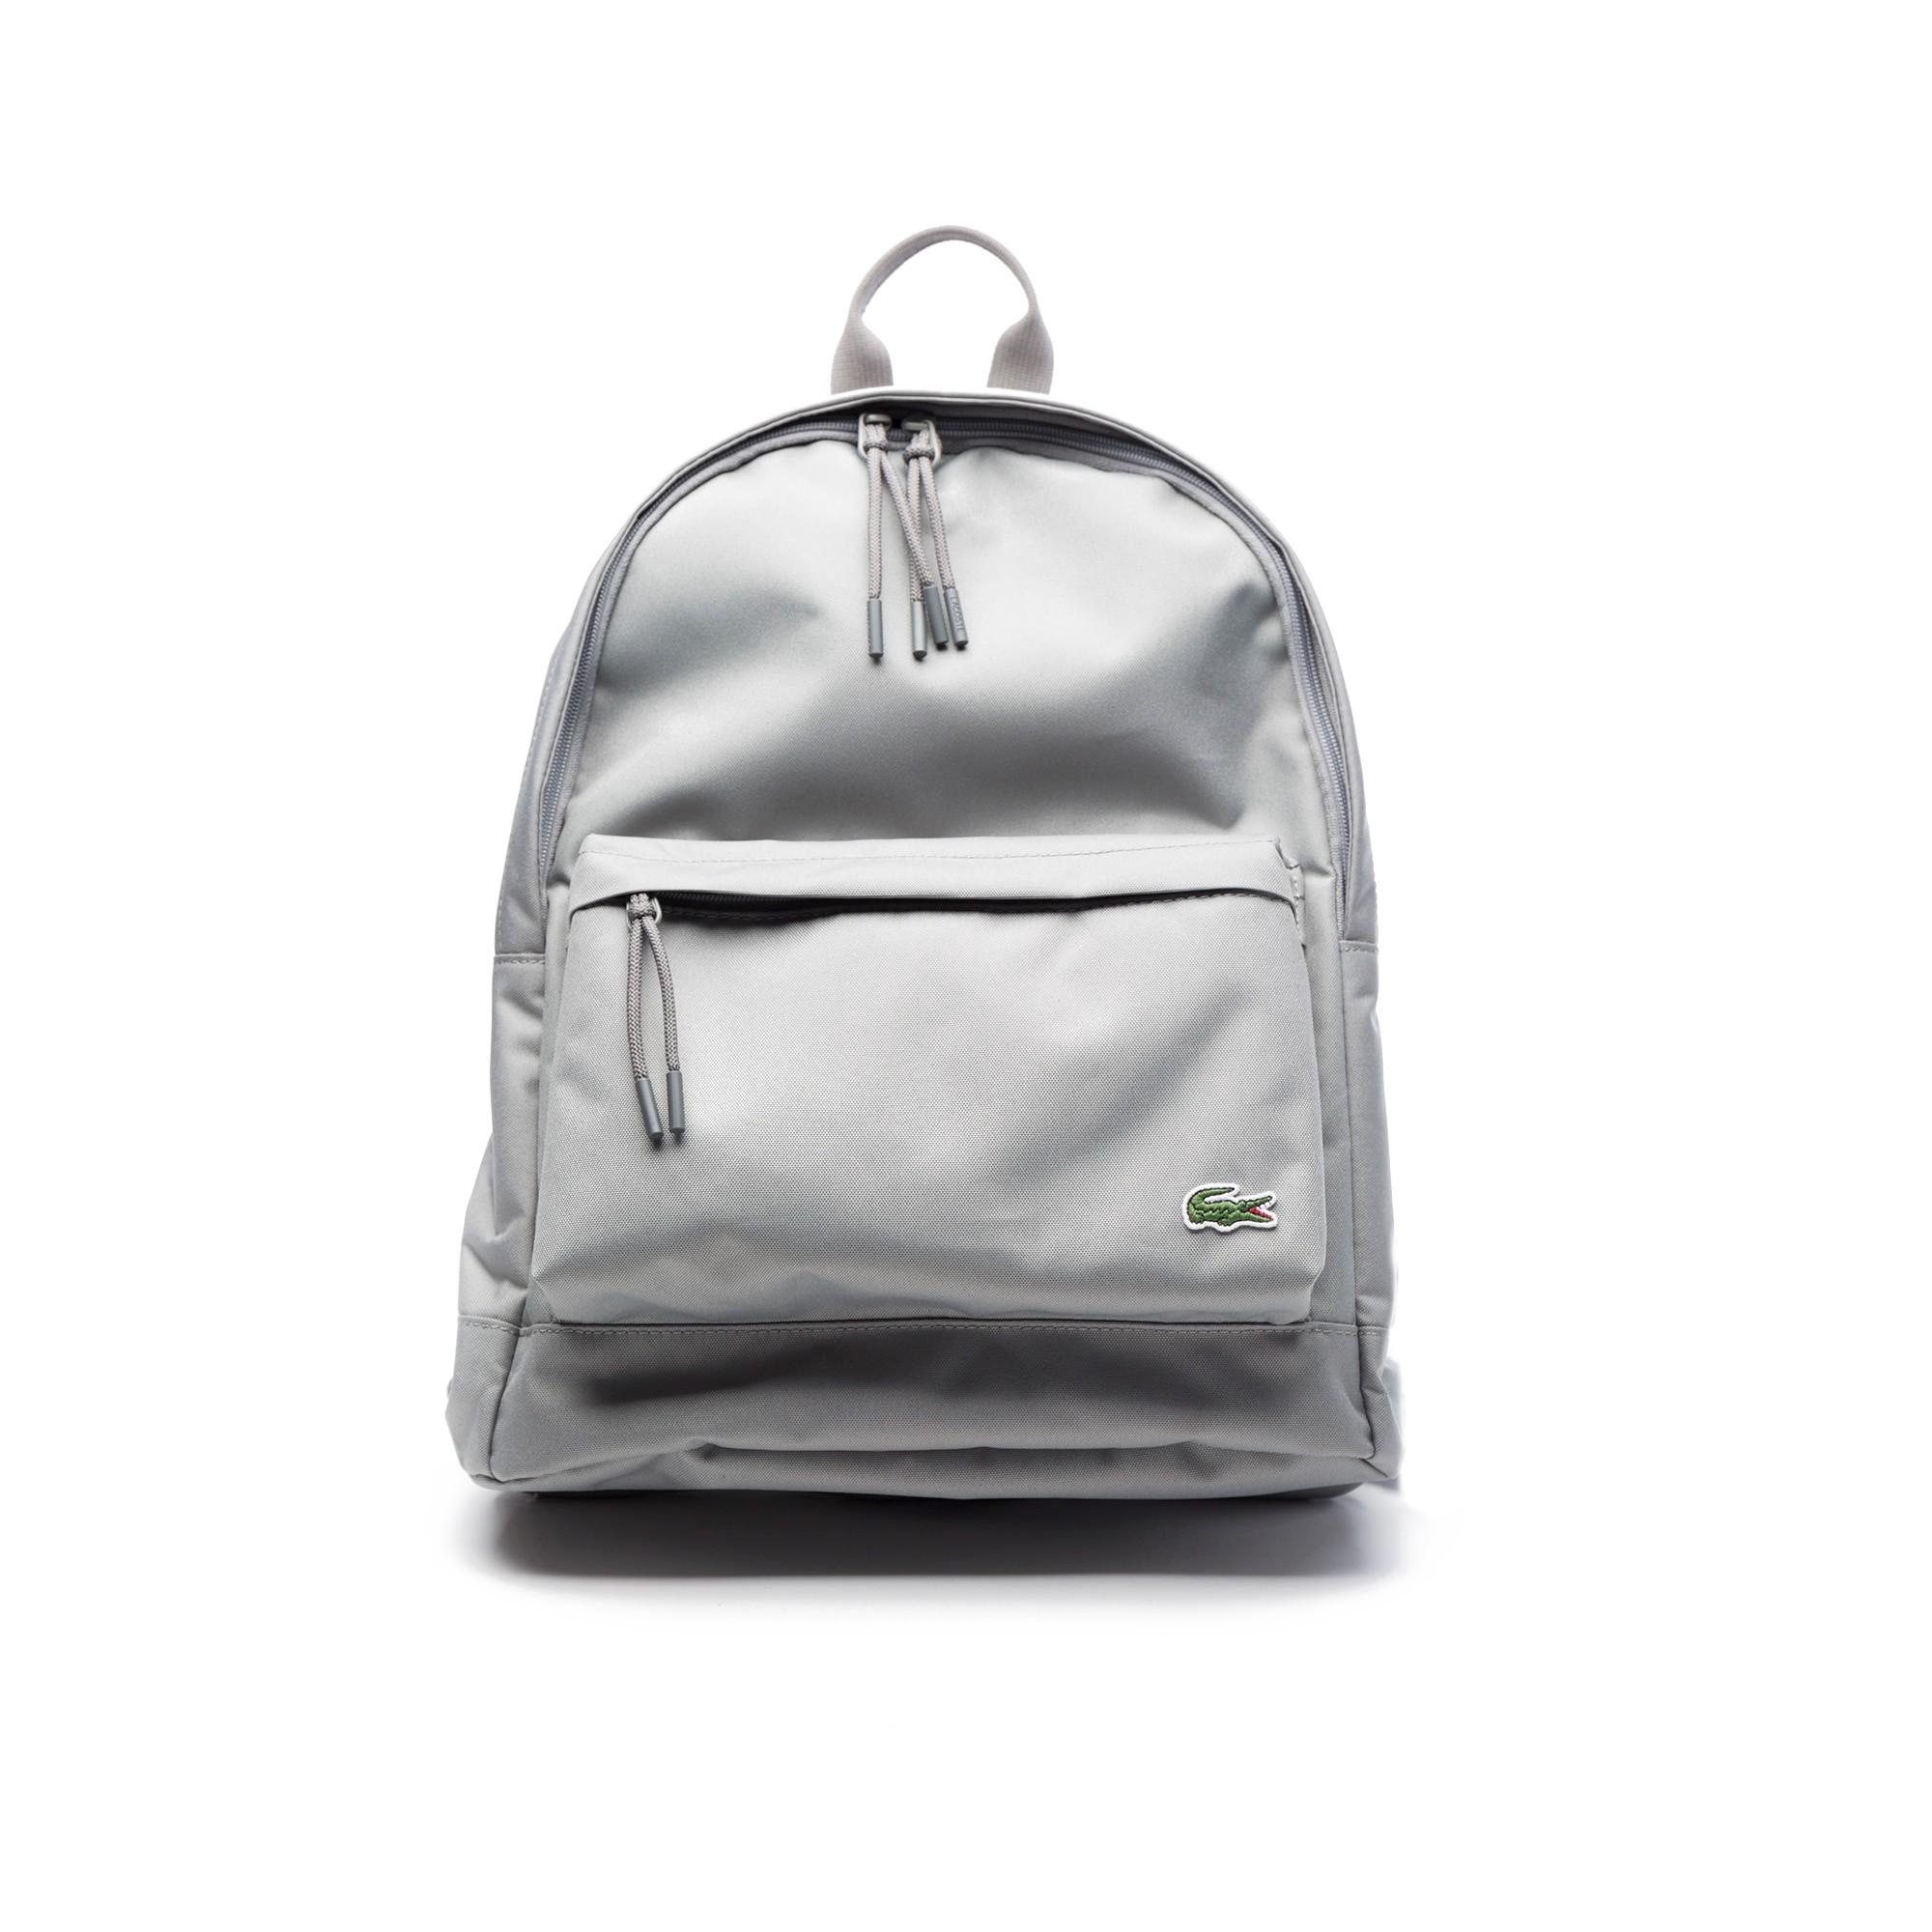 neocroc backpack